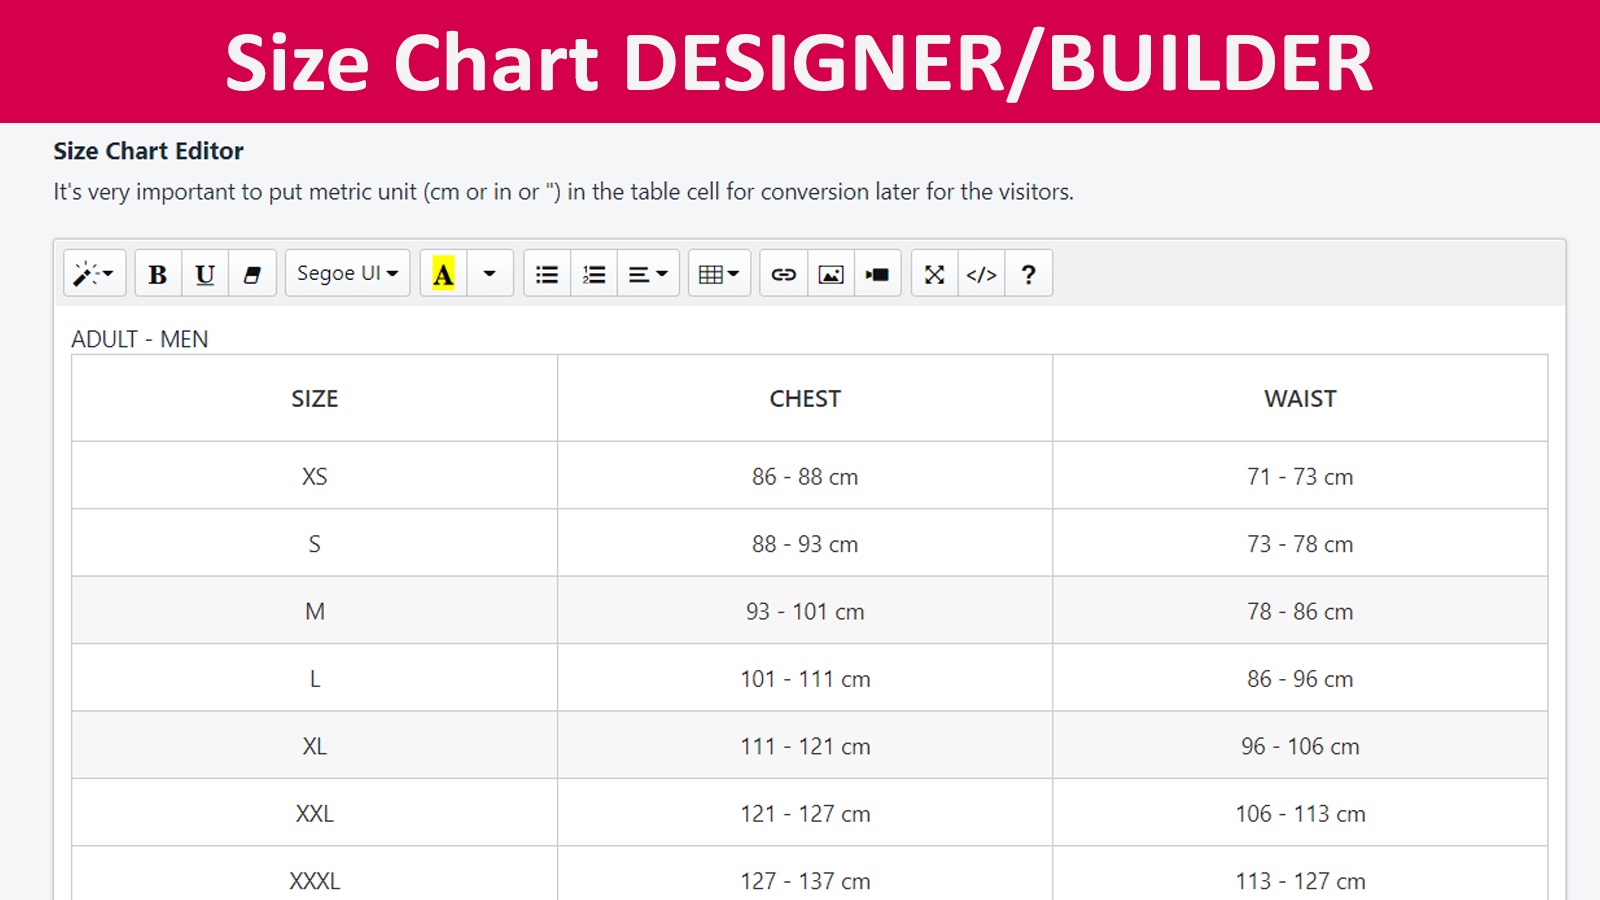 Advanced size chart designer